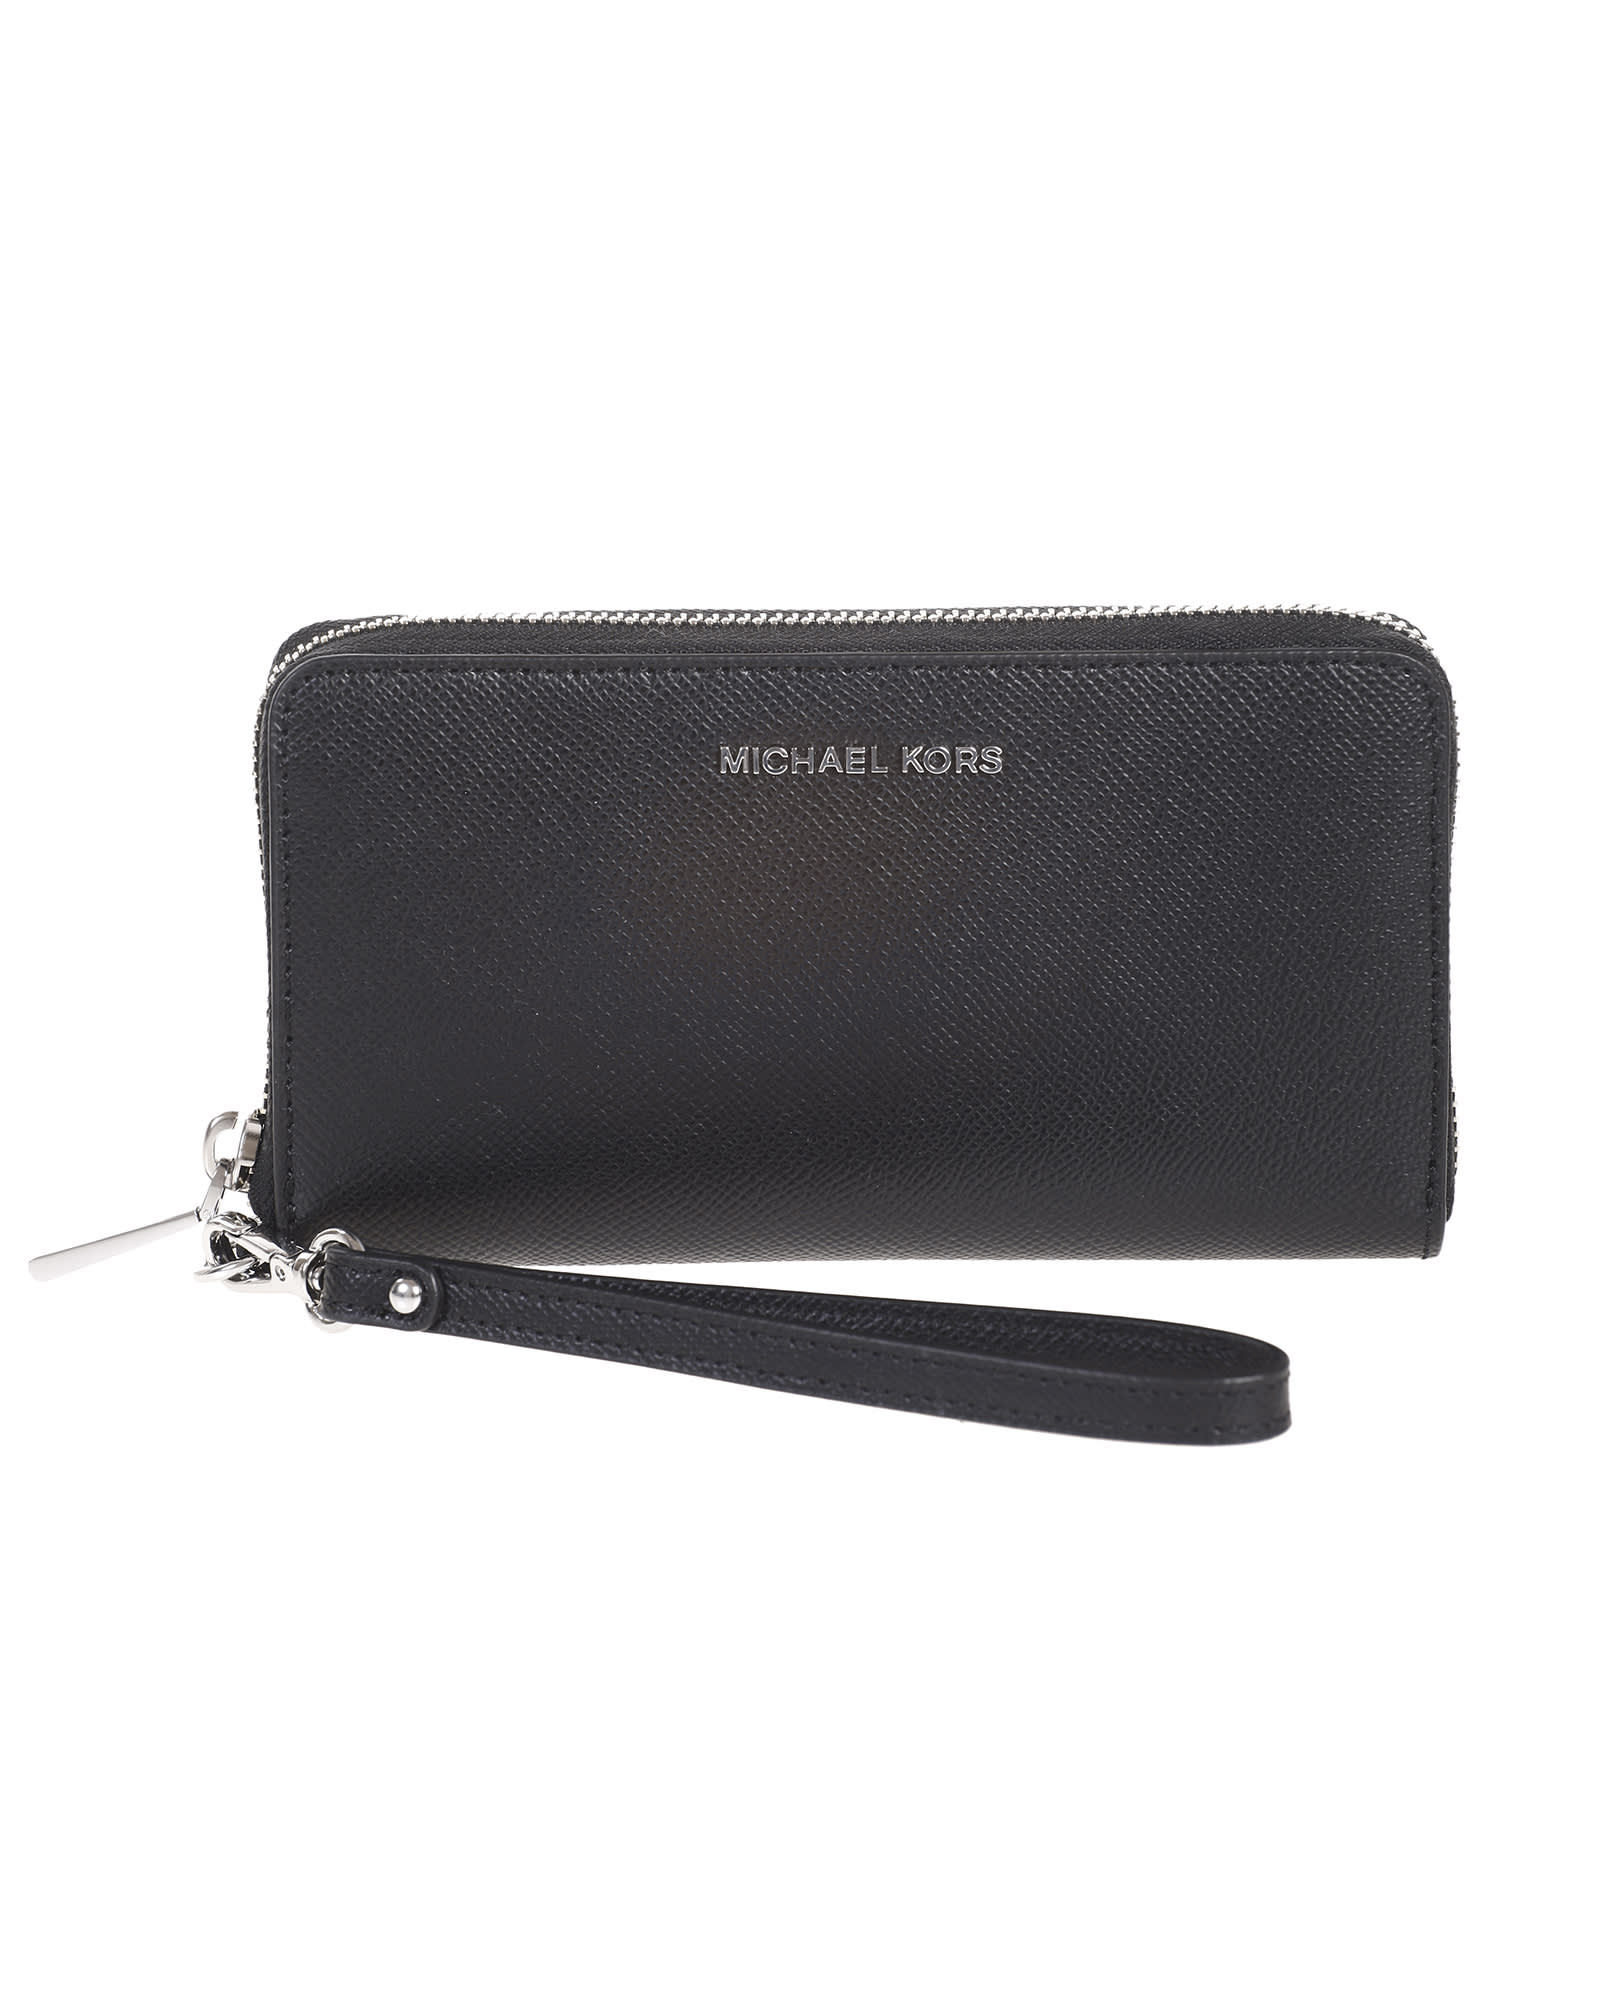 MICHAEL MICHAEL KORS Leather wristlet clutch bag for smartphone